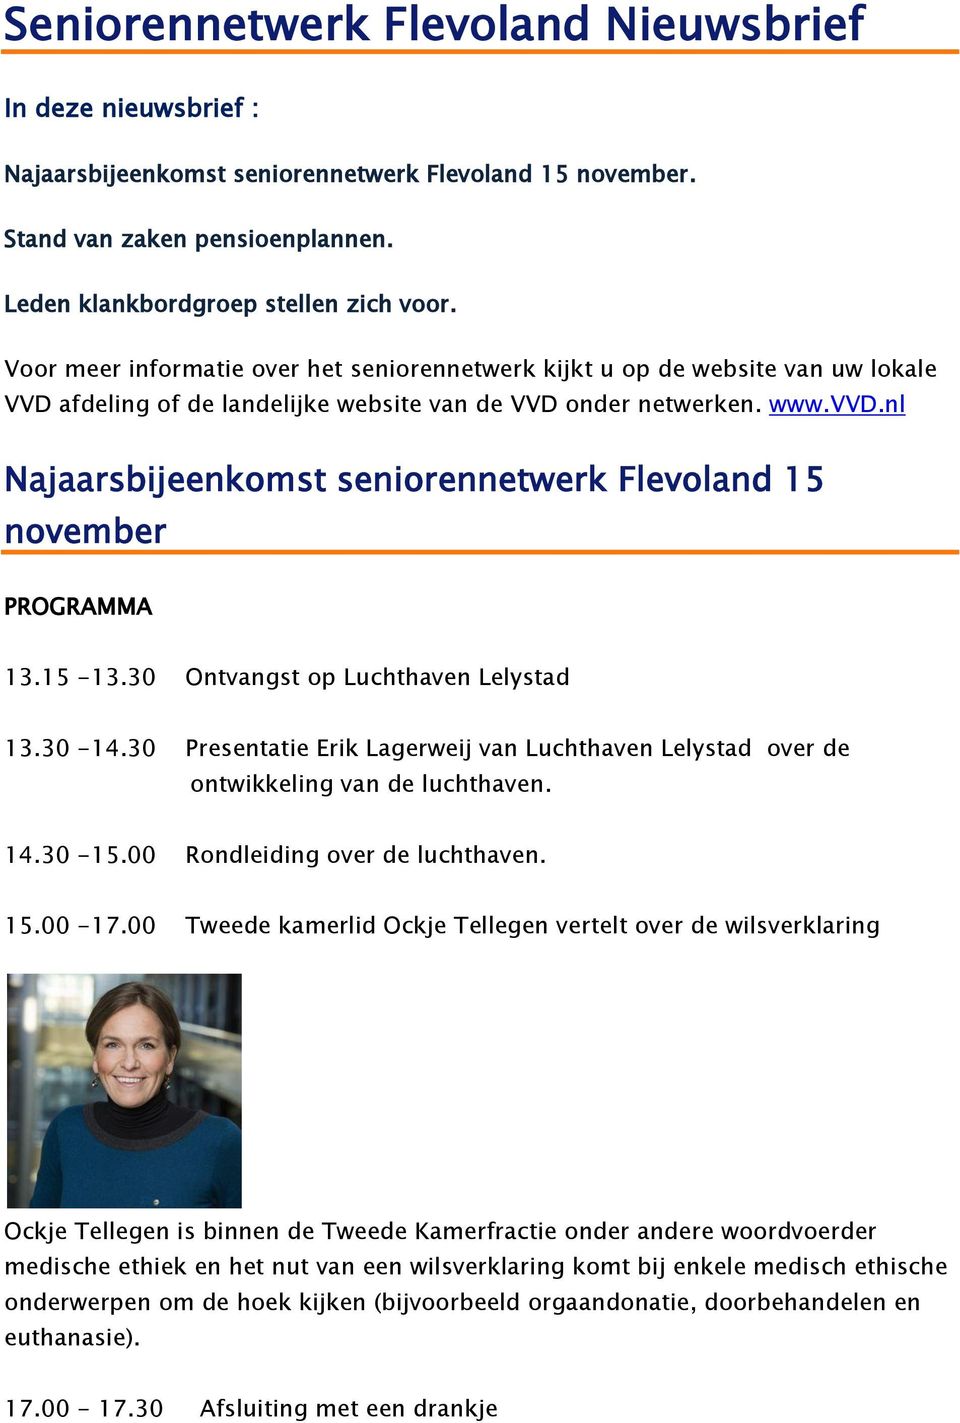 nl Najaarsbijeenkomst seniorennetwerk Flevoland 15 november PROGRAMMA 13.15-13.30 Ontvangst op Luchthaven Lelystad 13.30-14.